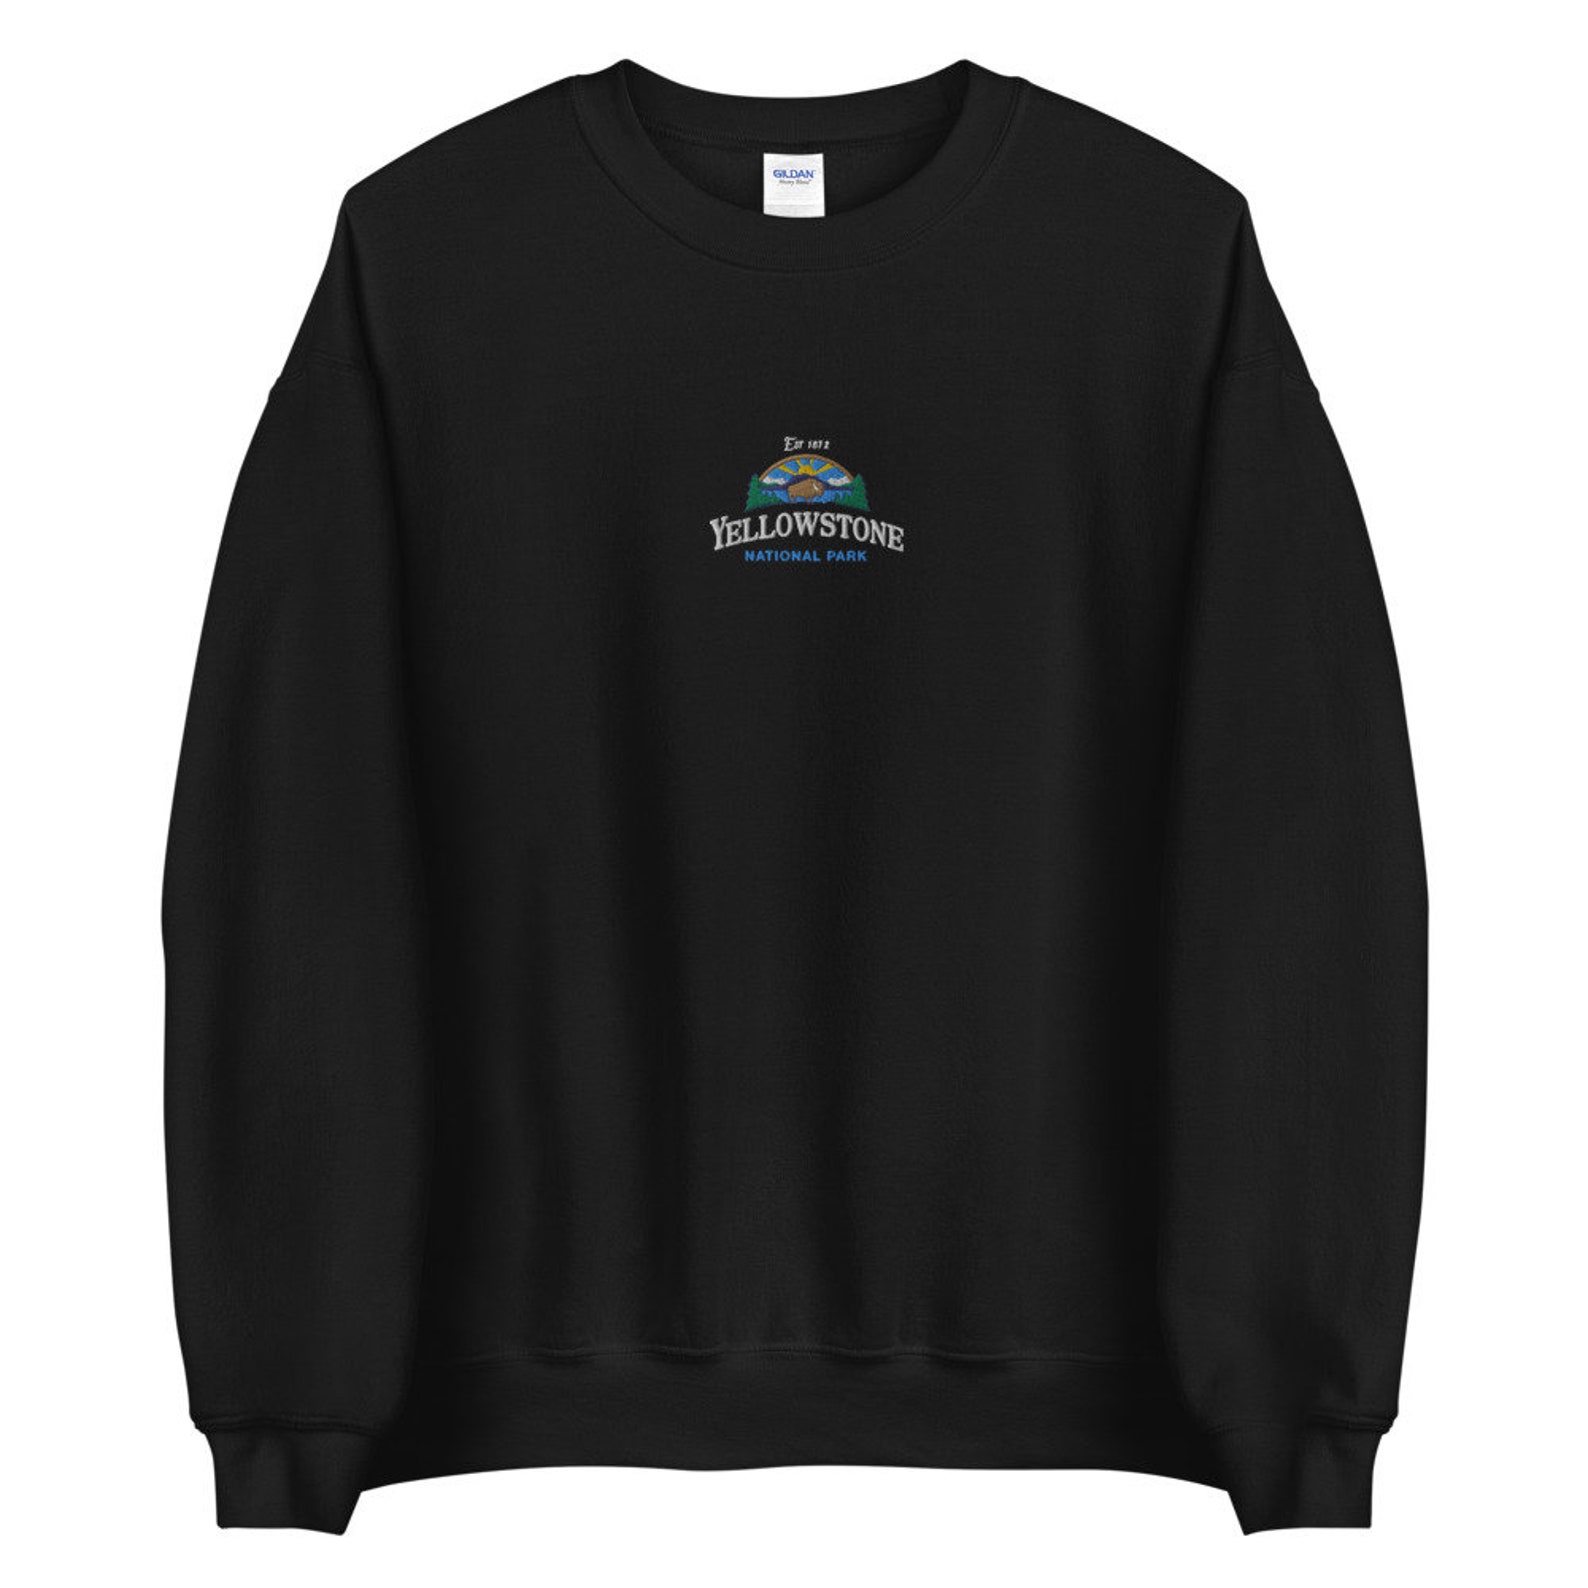 Yellowstone National Park Sweatshirt Vintage Crewneck | Etsy